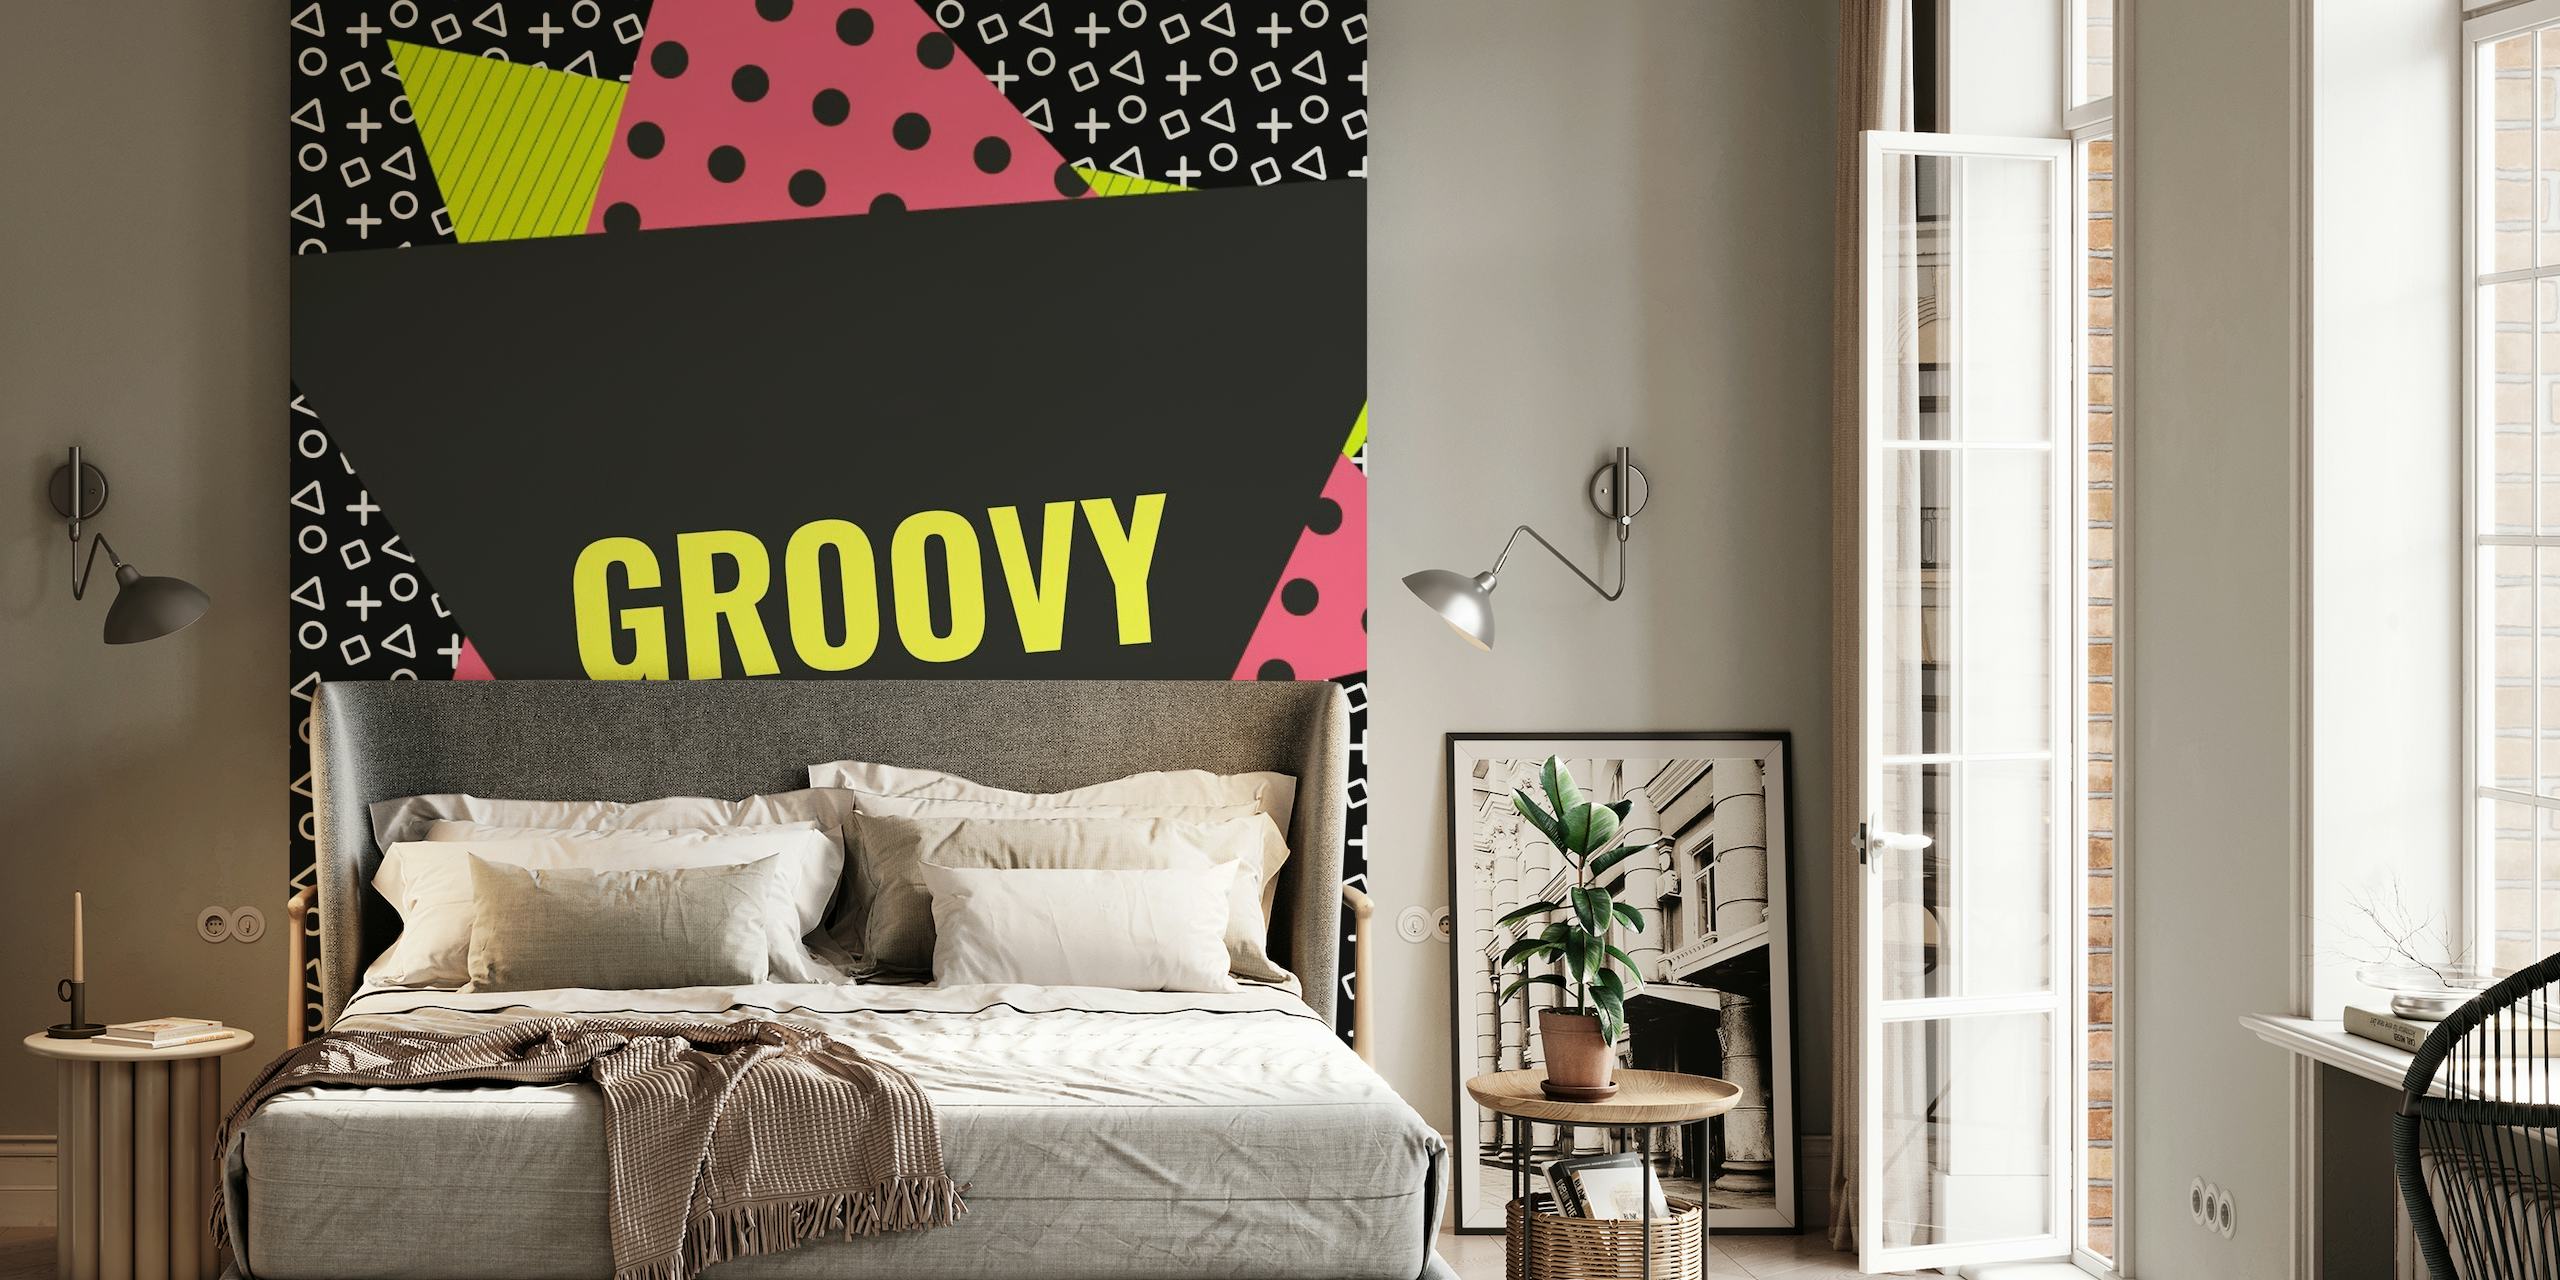 Memphis Style Geometrisk vægmaleri med 'Groovy' tekst, abstrakte former og dristige farver